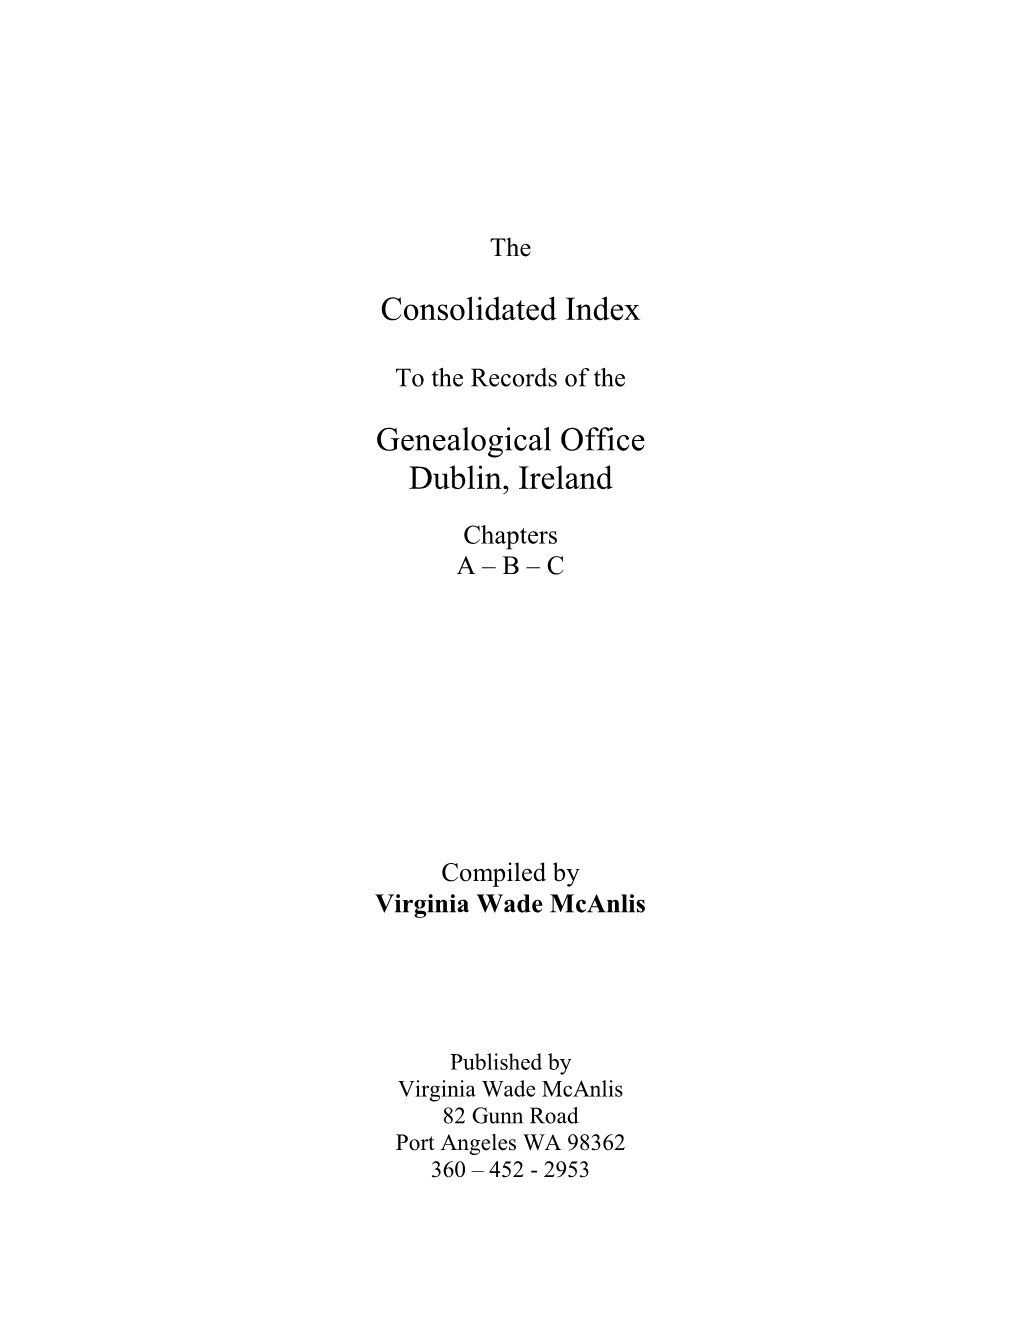 Consolidated Index Genealogical Office Dublin, Ireland